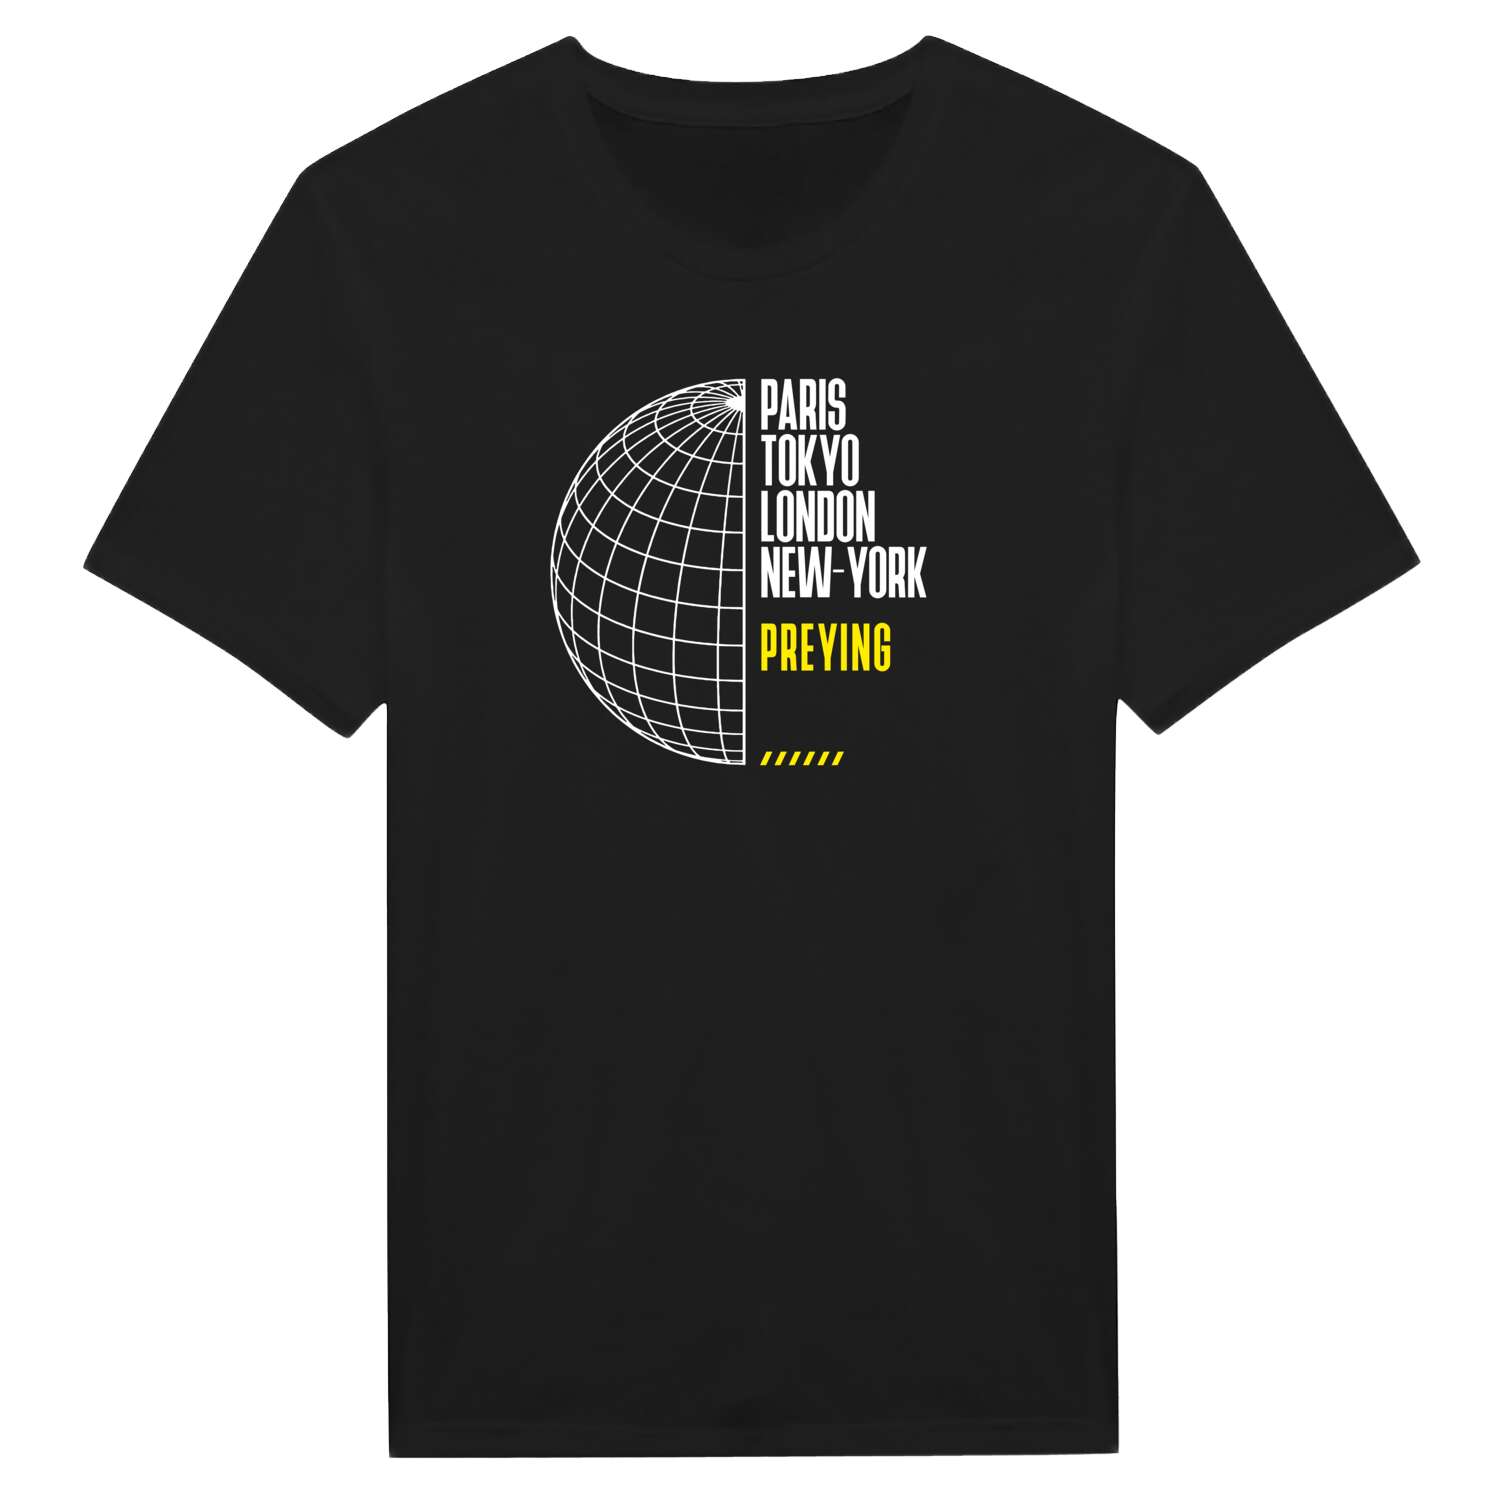 Preying T-Shirt »Paris Tokyo London«